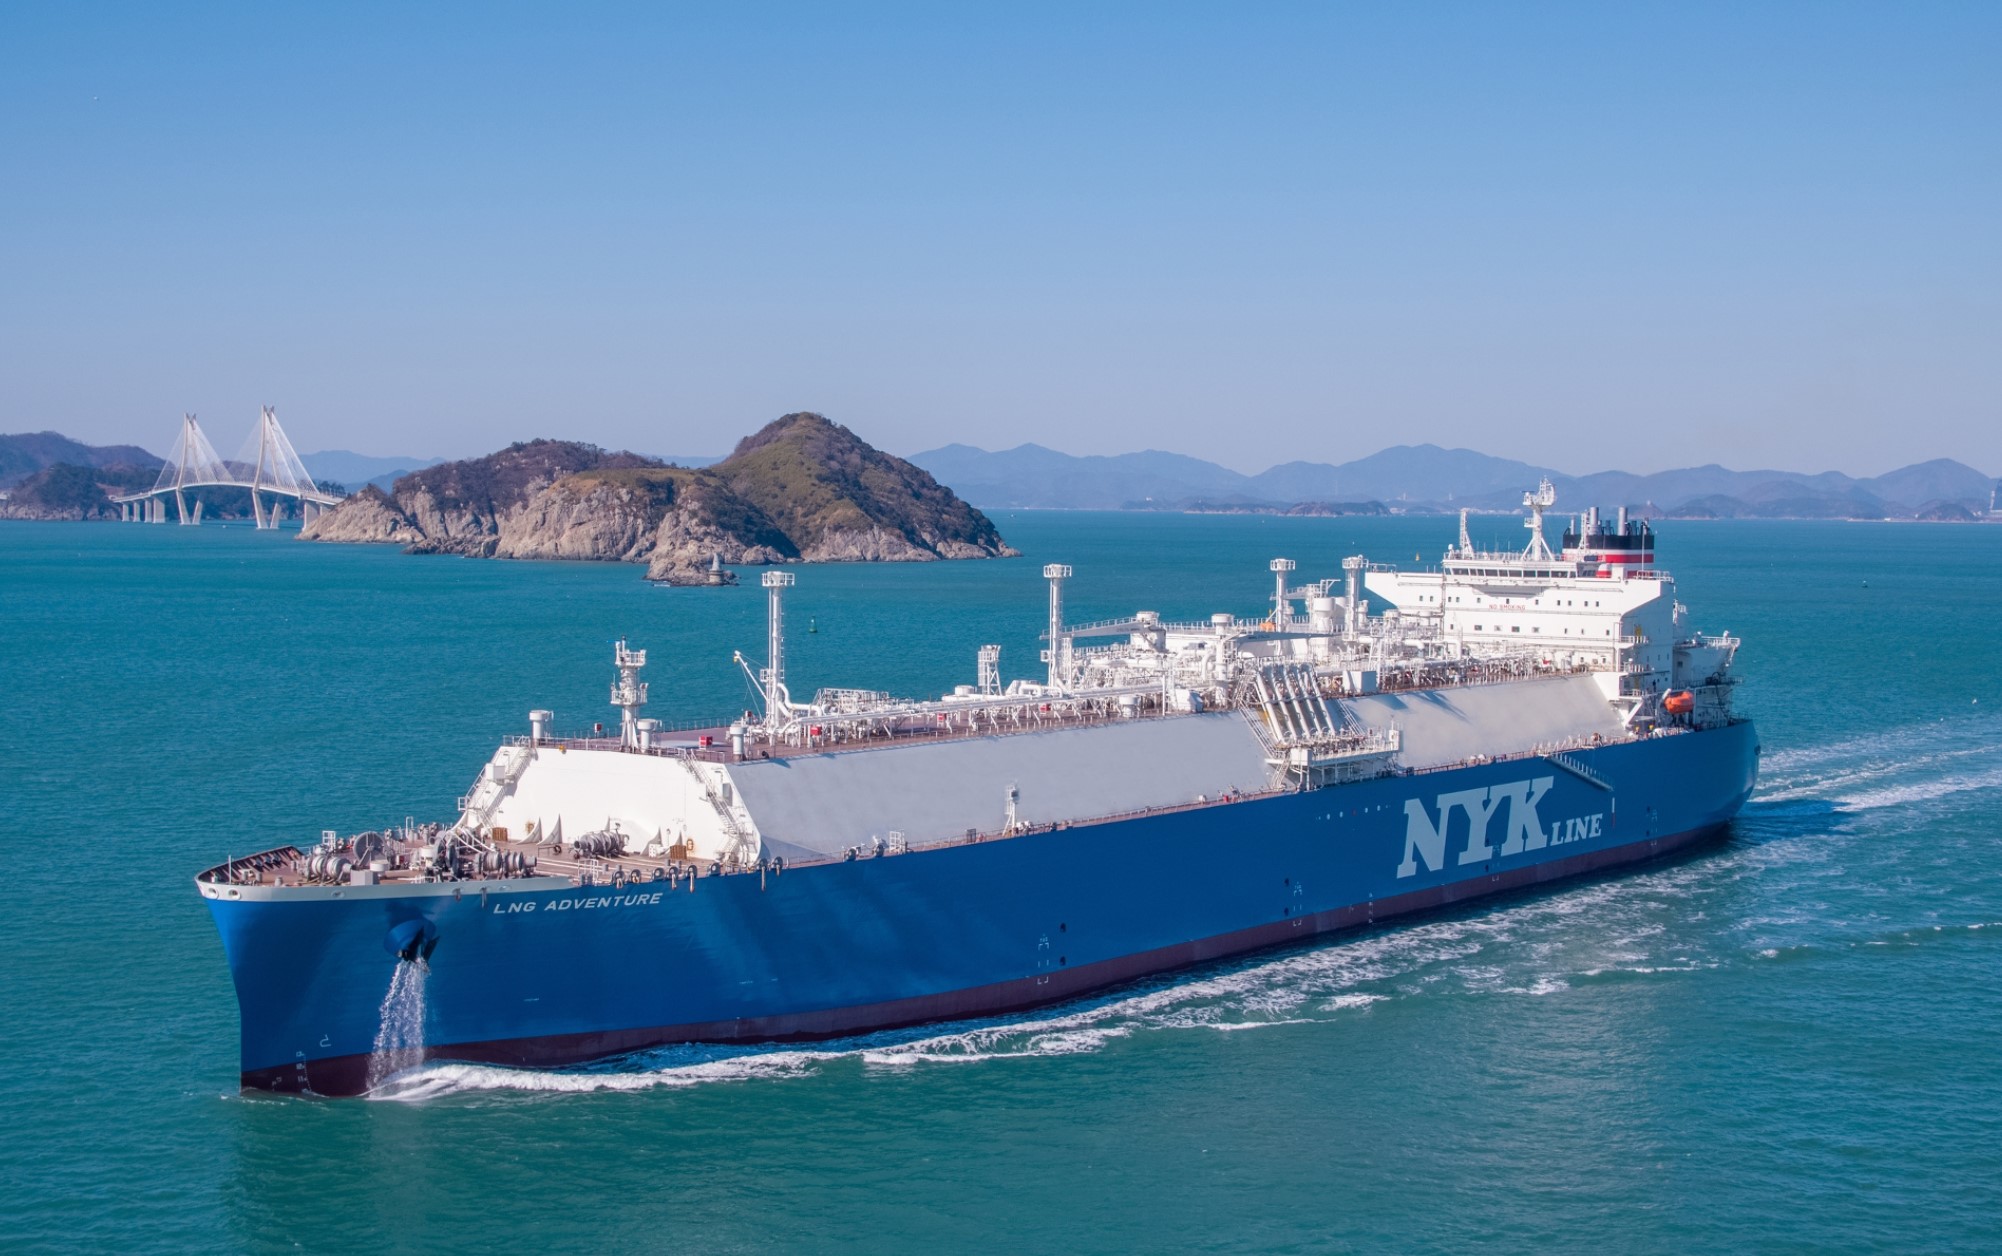 LNG Adventure joins Total's fleet